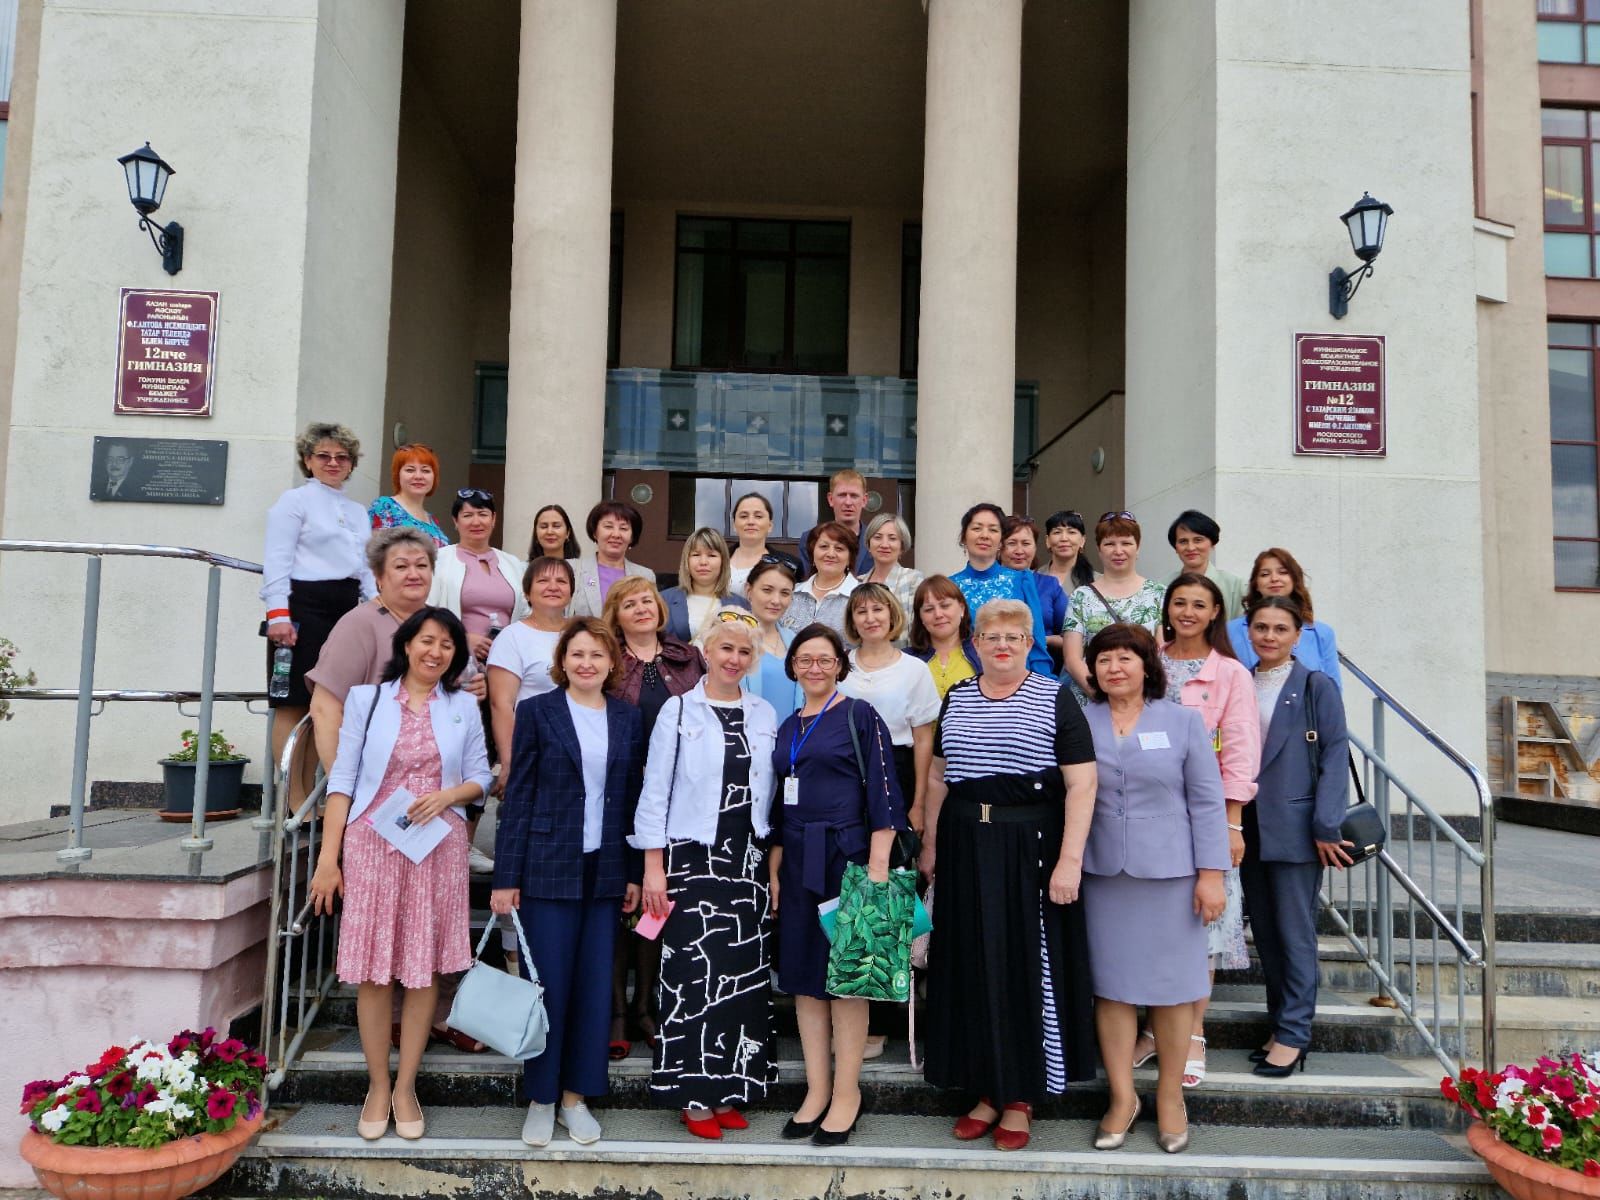 Балтачлылар татар теле һәм әдәбияты укытучыларының VIII Бөтенроссия съездында катнашты (+фото)